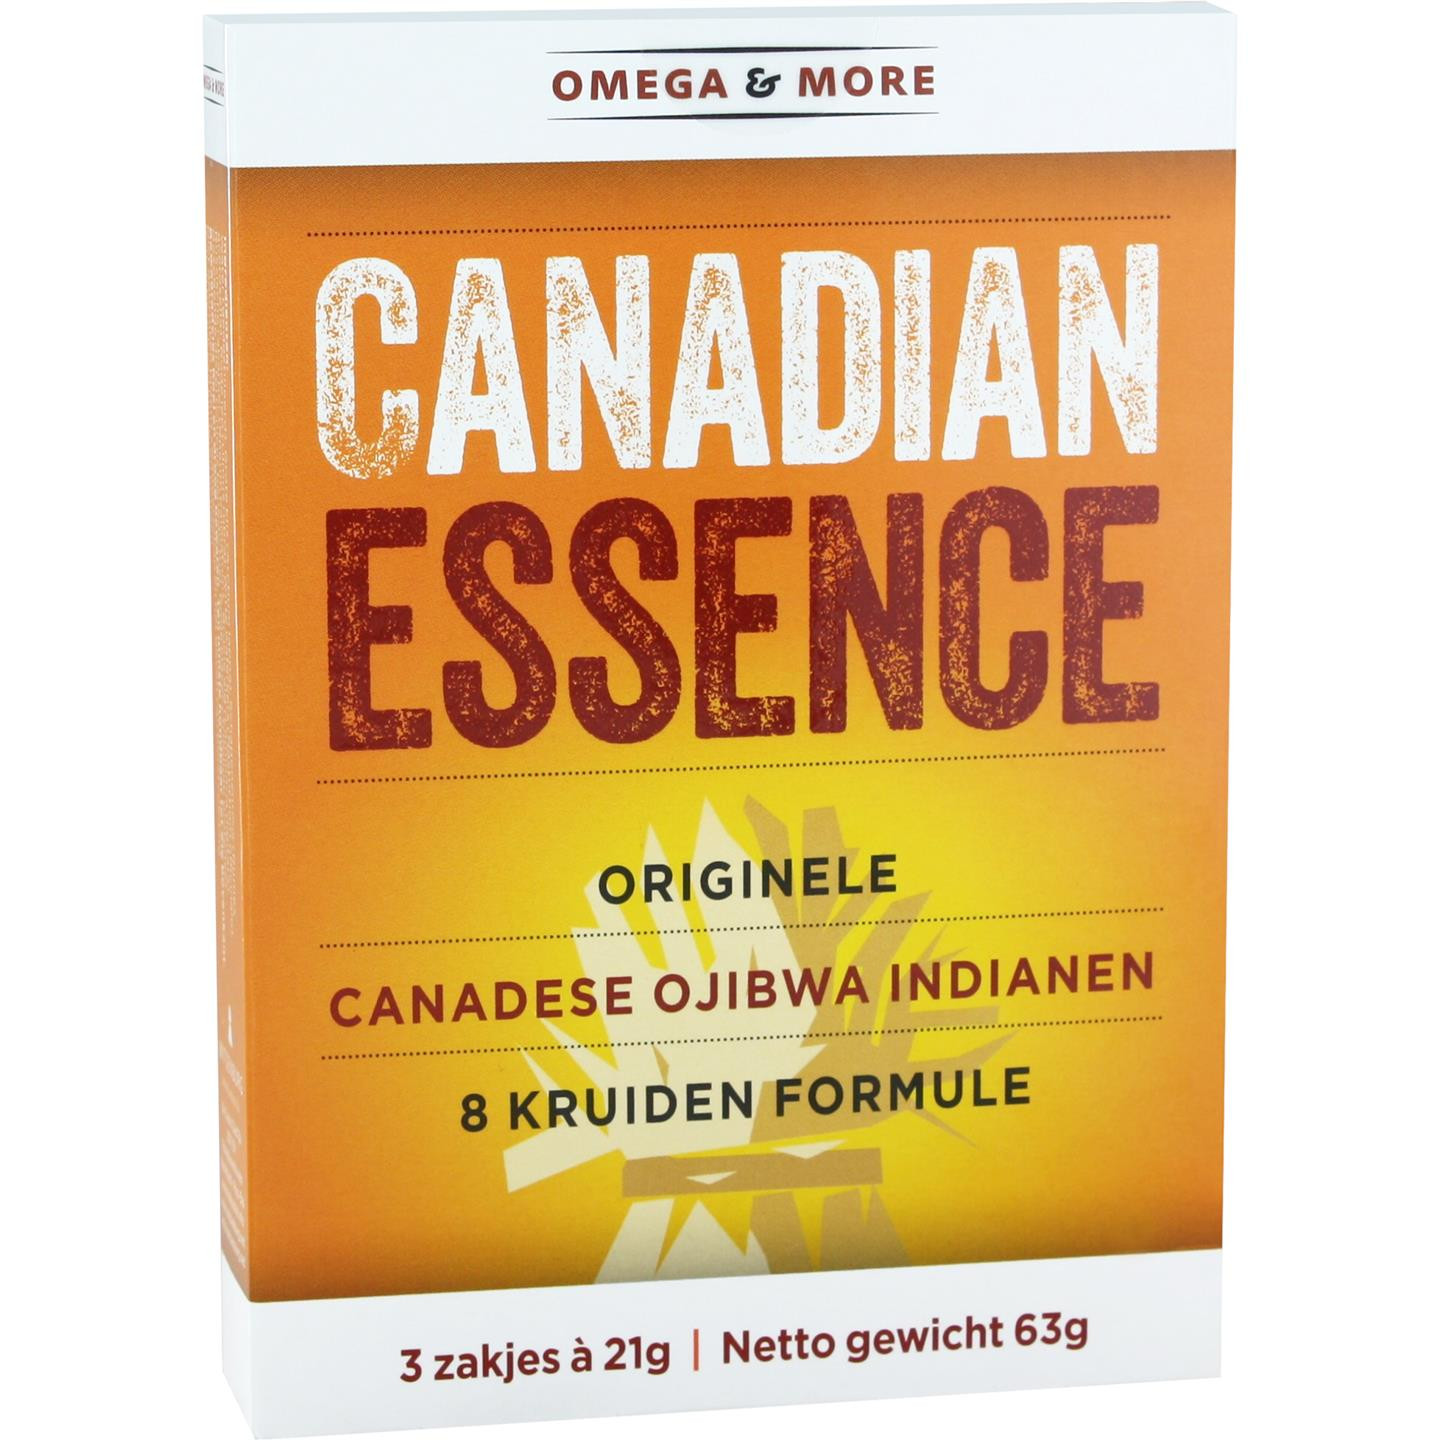 Canadian Essence